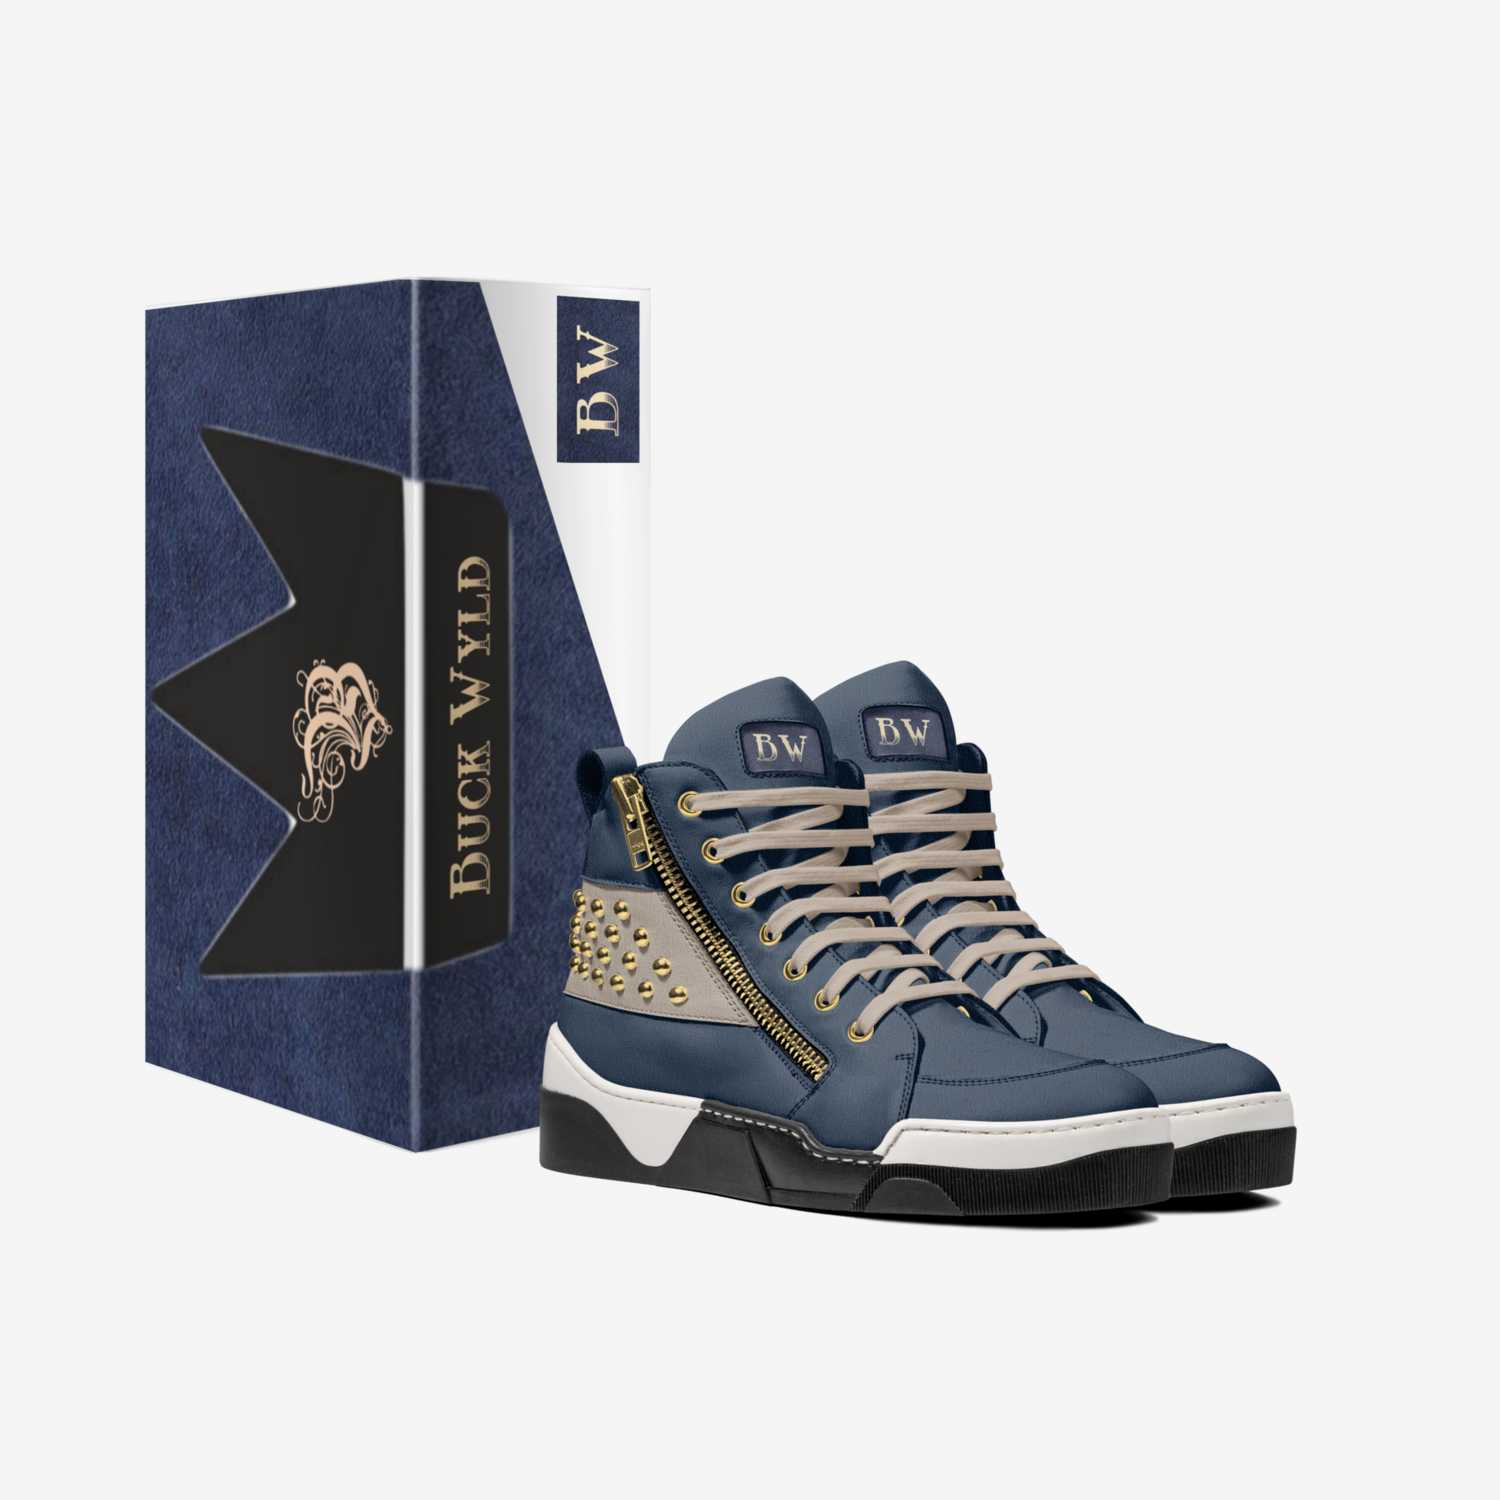 Royal-Oceania custom made in Italy shoes by Garrett Berlier | Box view